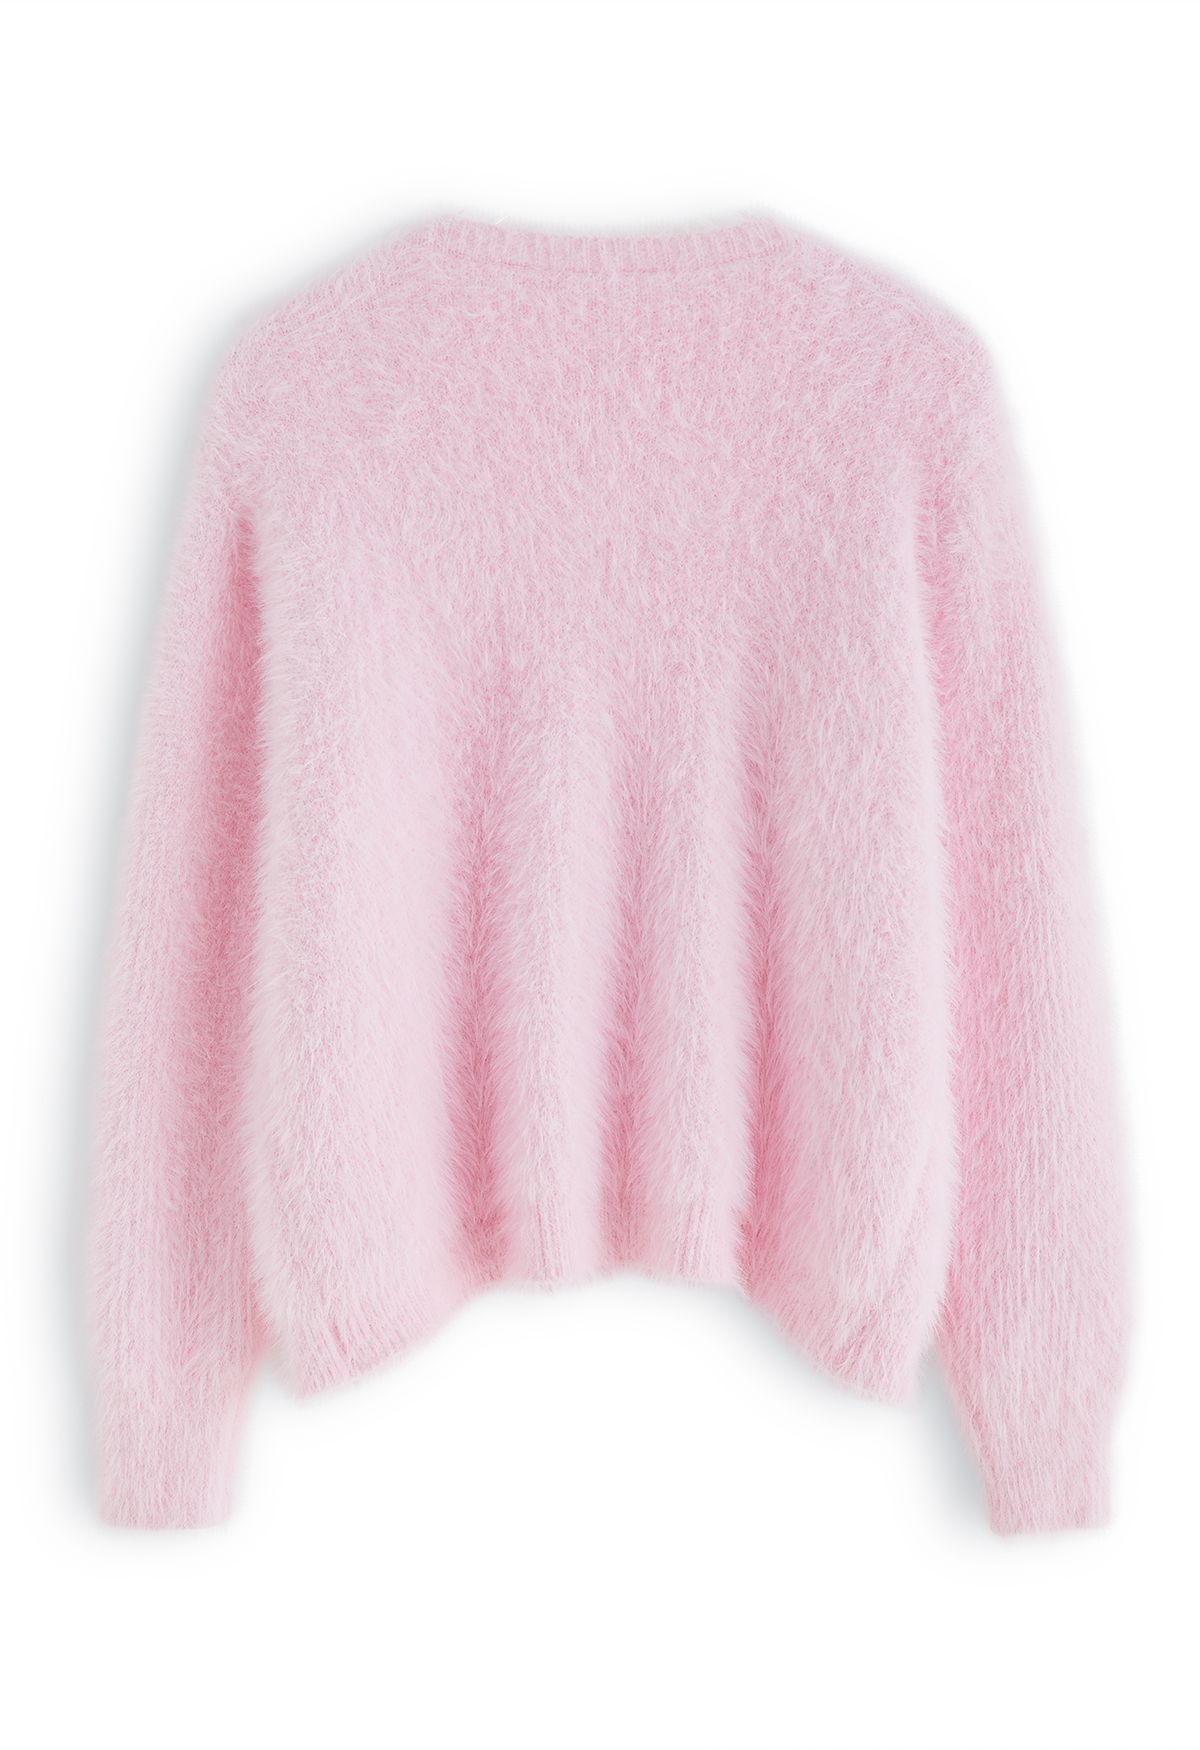 Fluffy V-Neck Sequins Buttoned Crop Cardigan in Pink